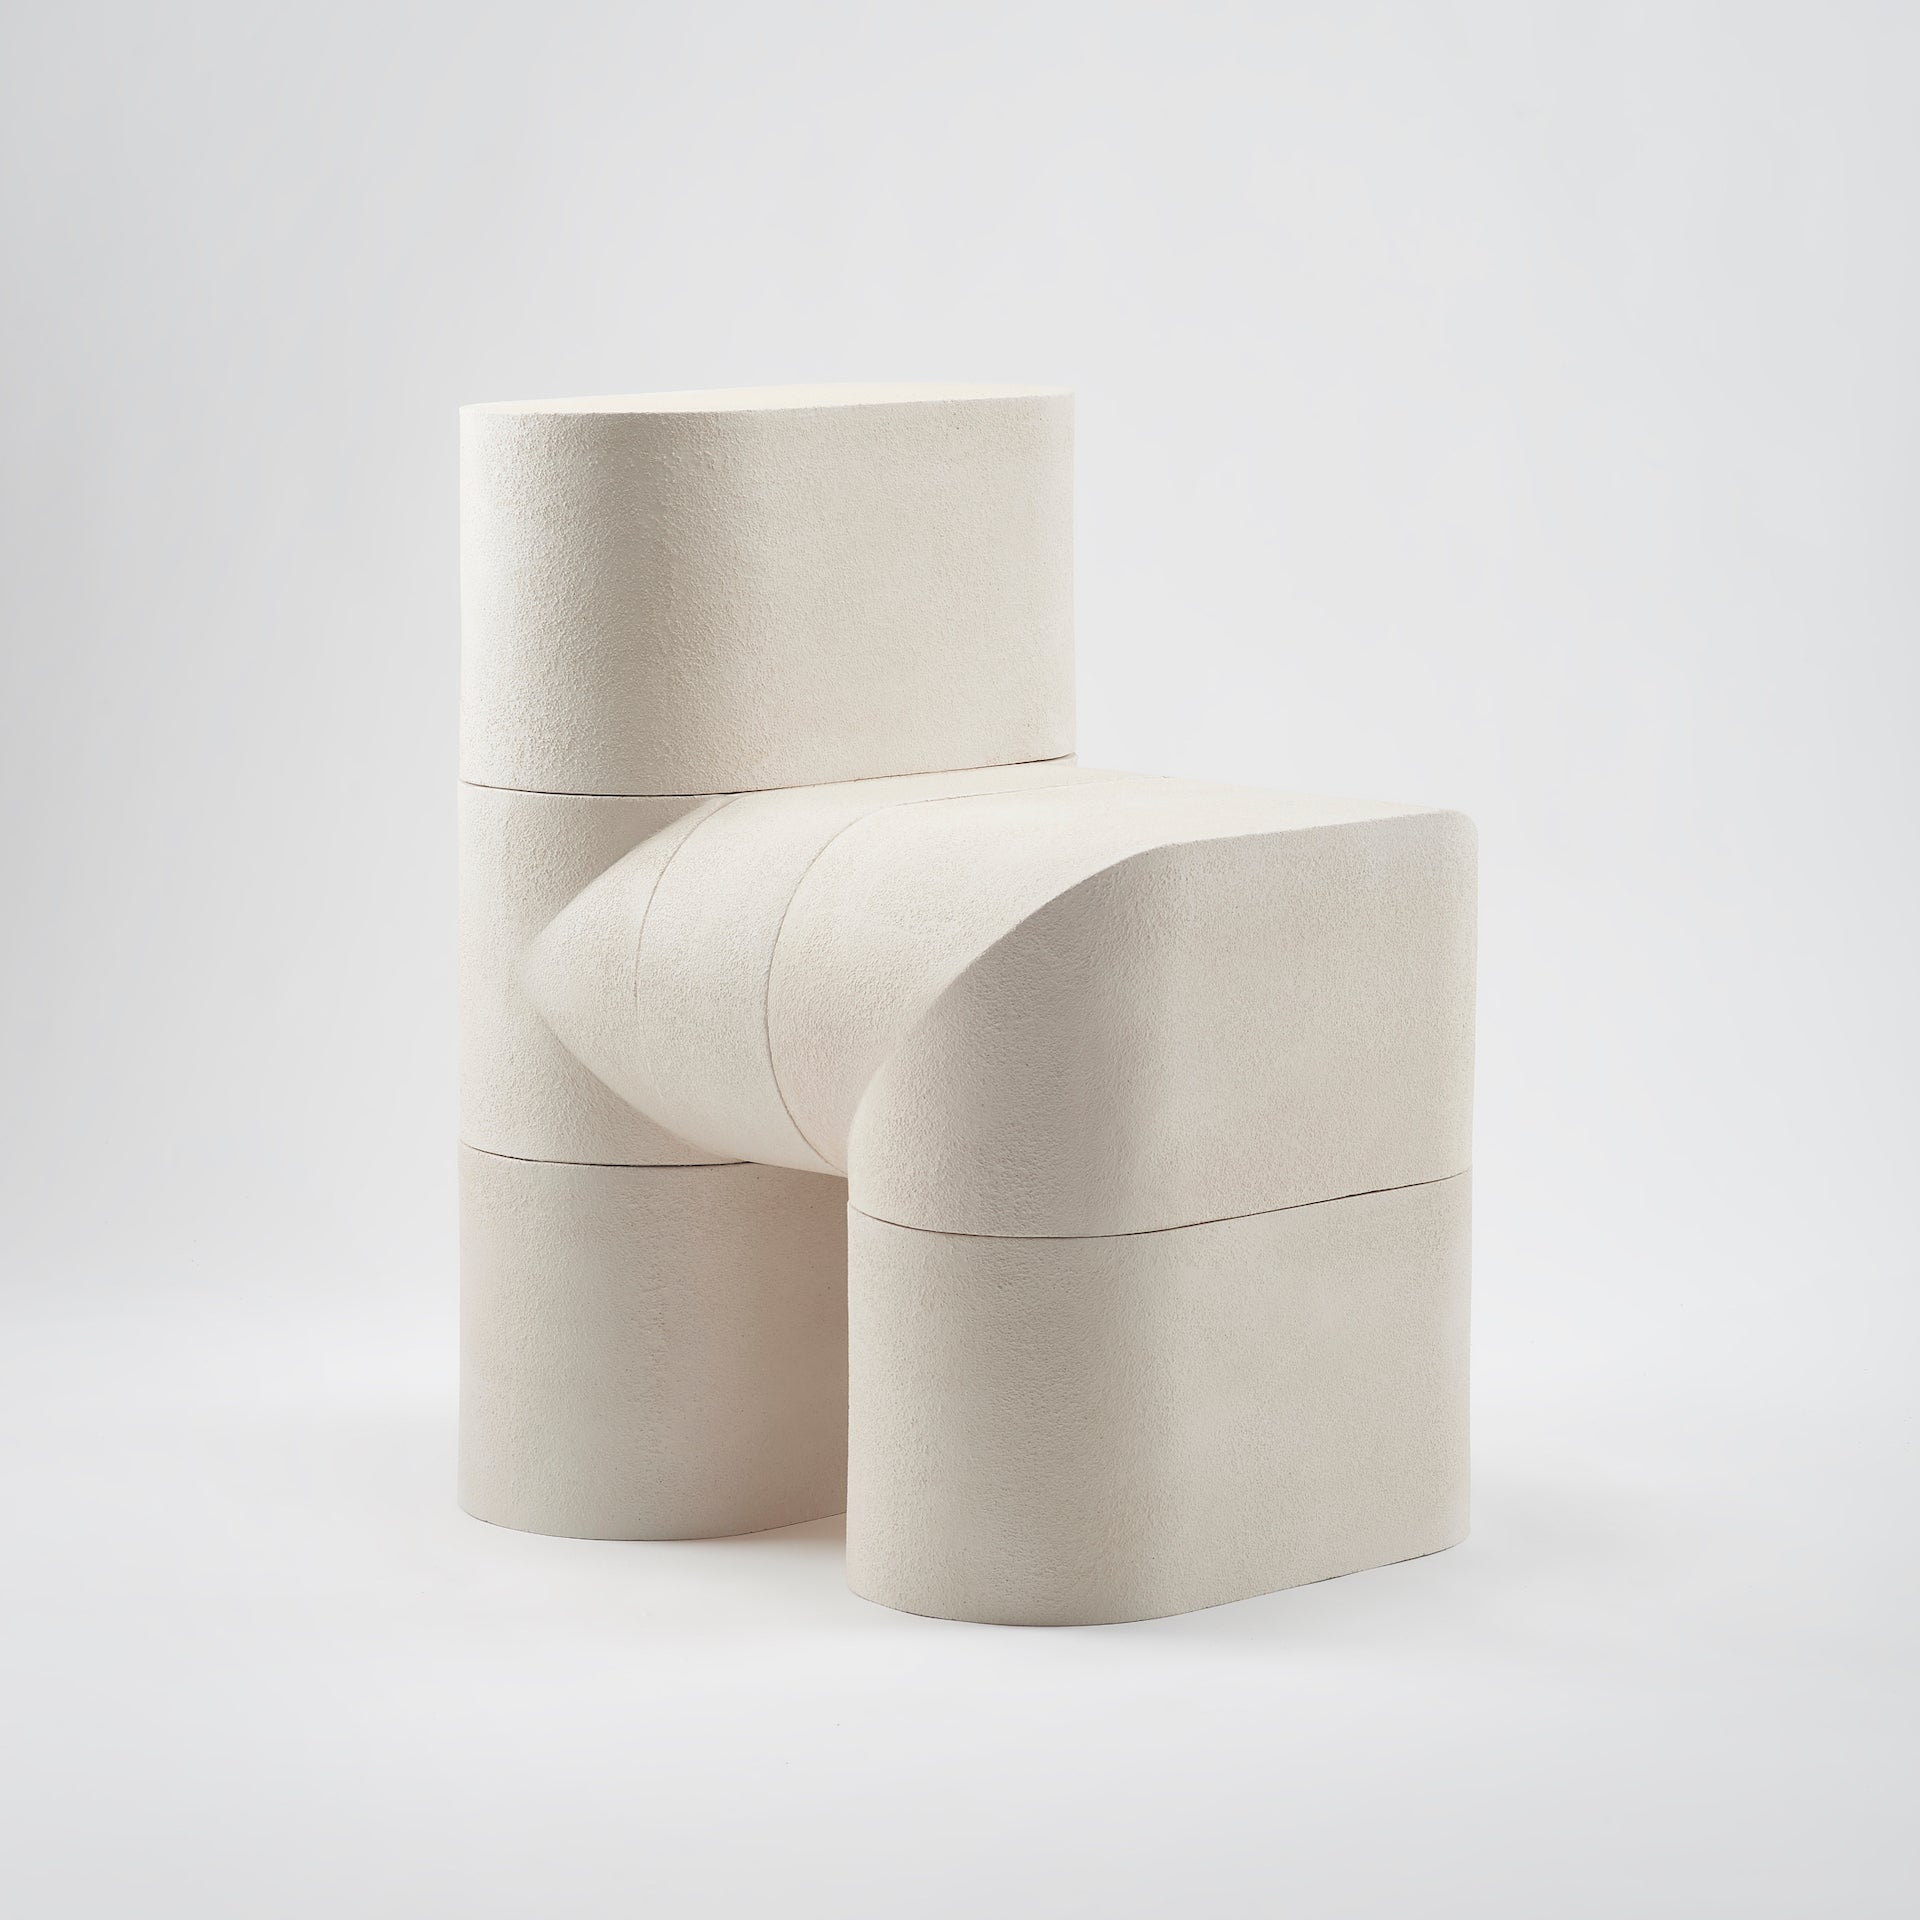 Modules chair (2021) by Rino Claessens. Ceramic. Photo bourtesy of Rino Claessens for Galerie SCENE OUVERTE